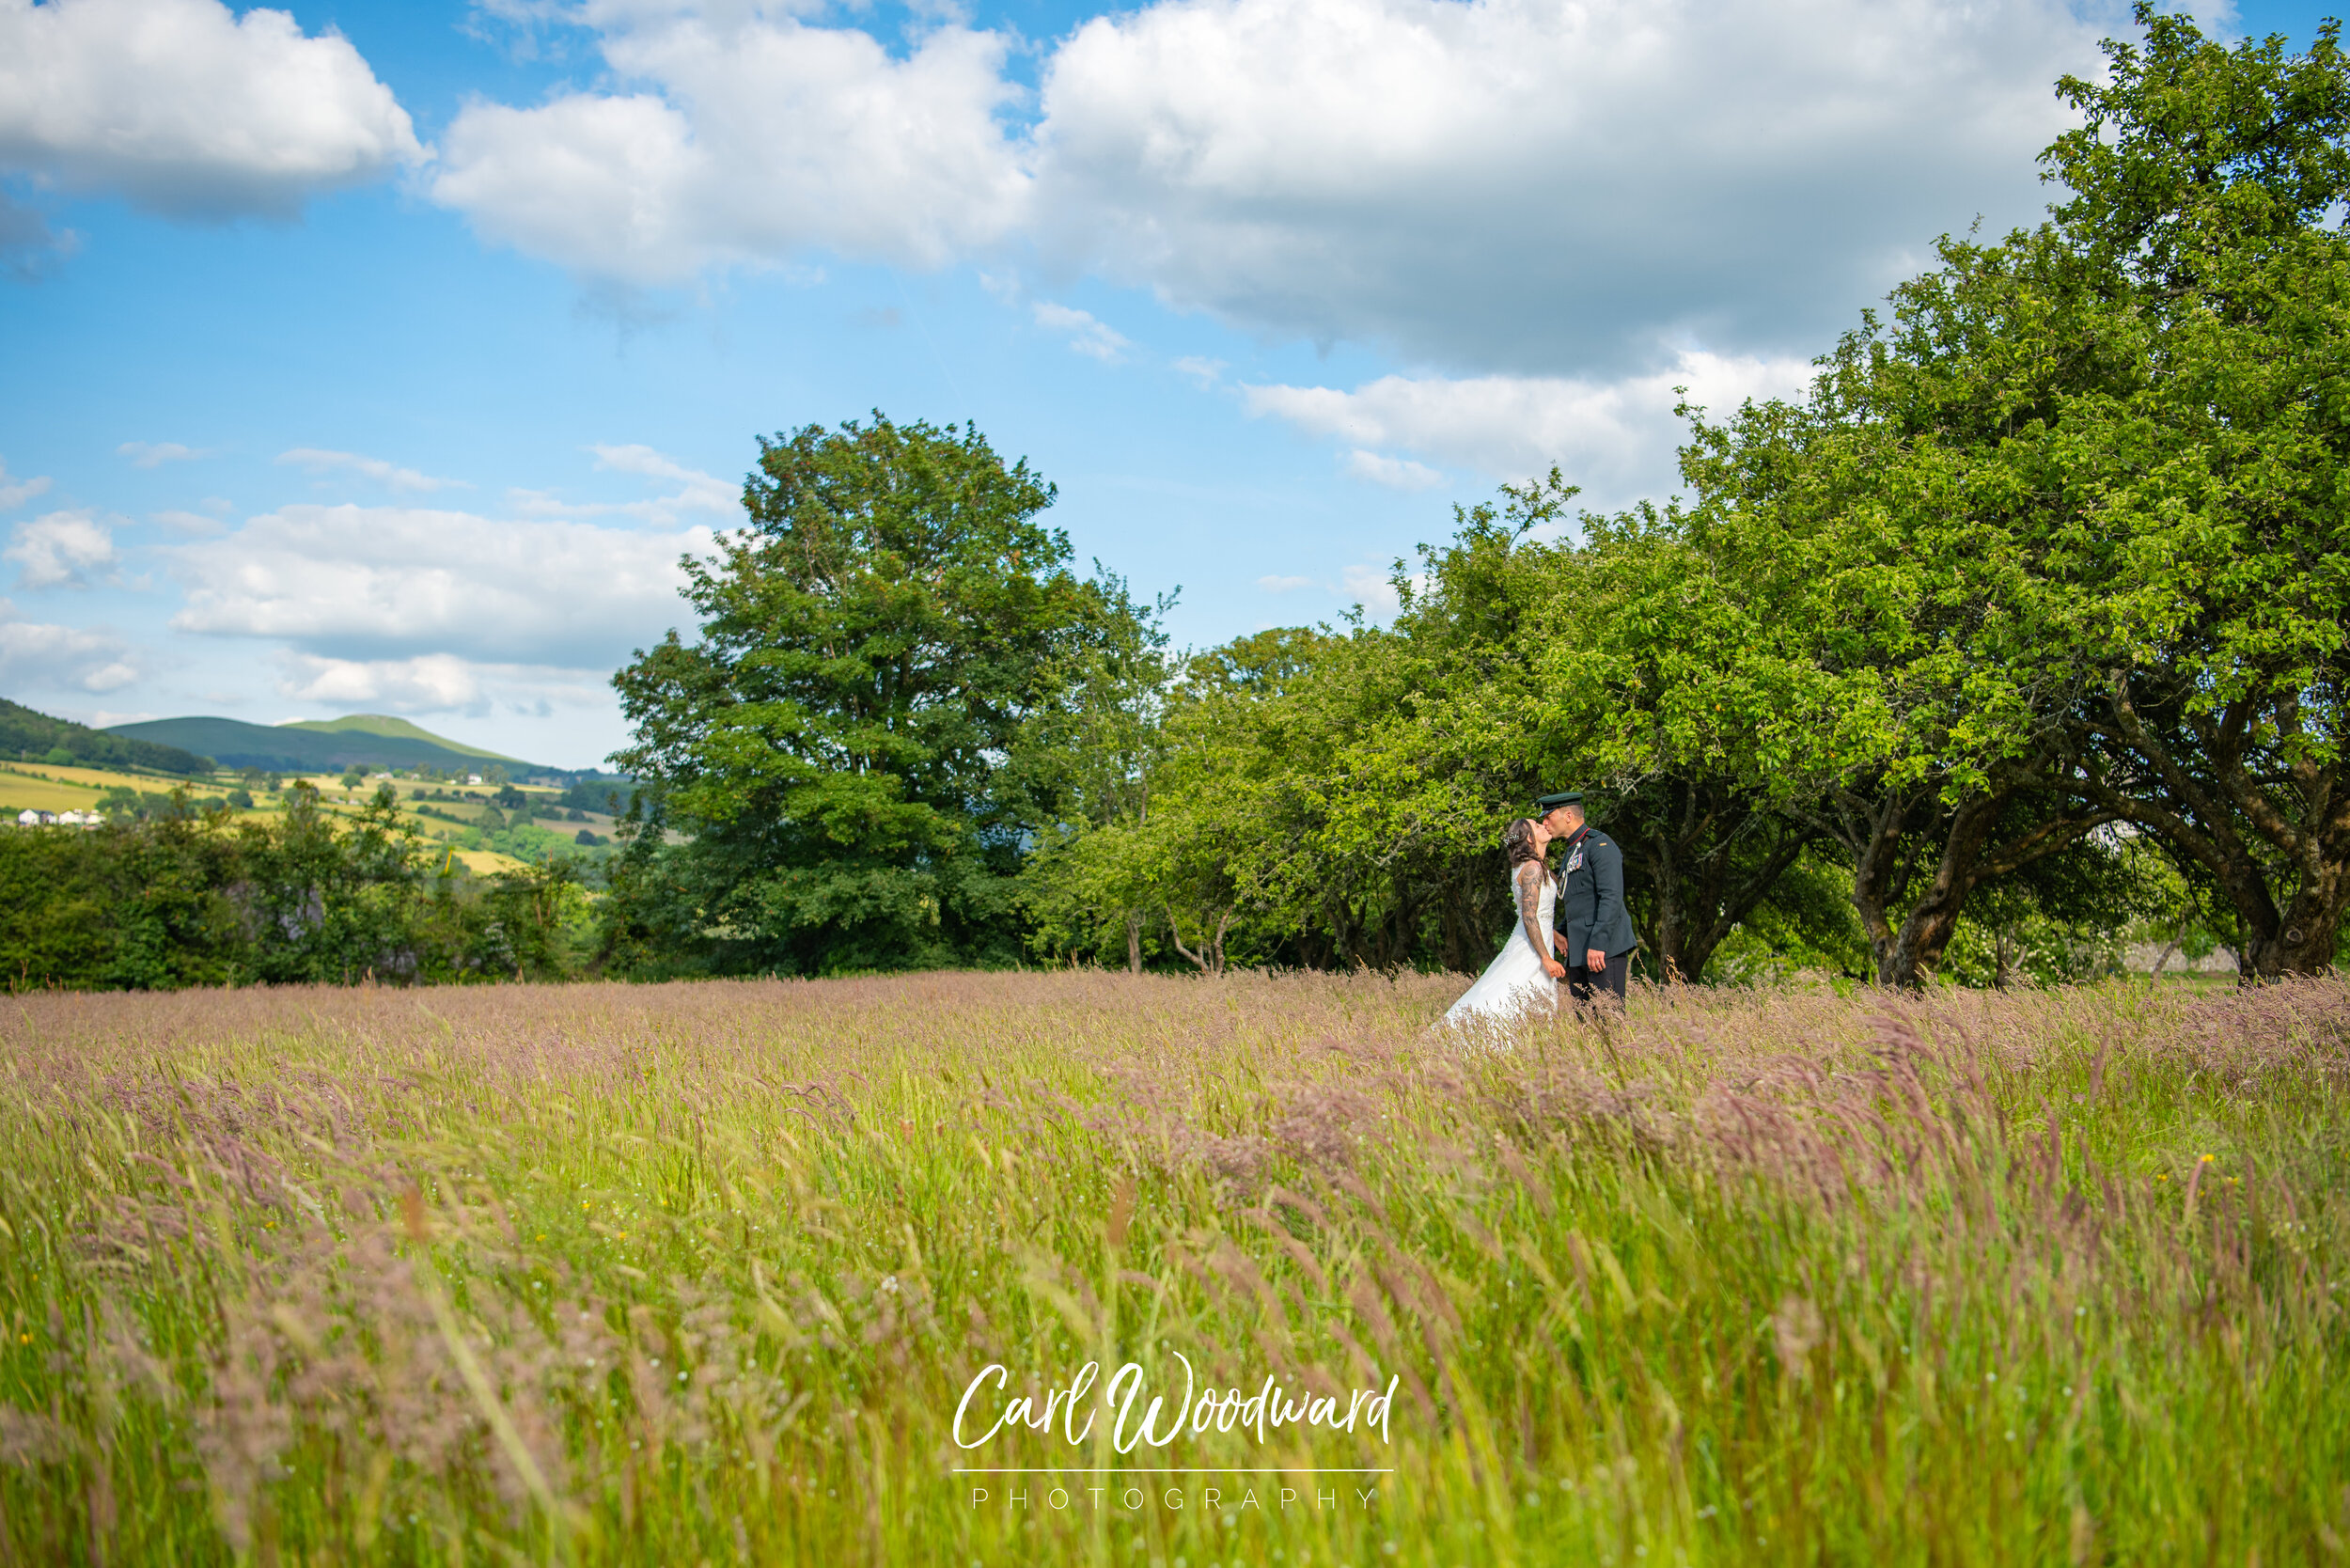 013-Military-Wedding-Photographer-Cardiff-Wedding-Photography.jpg